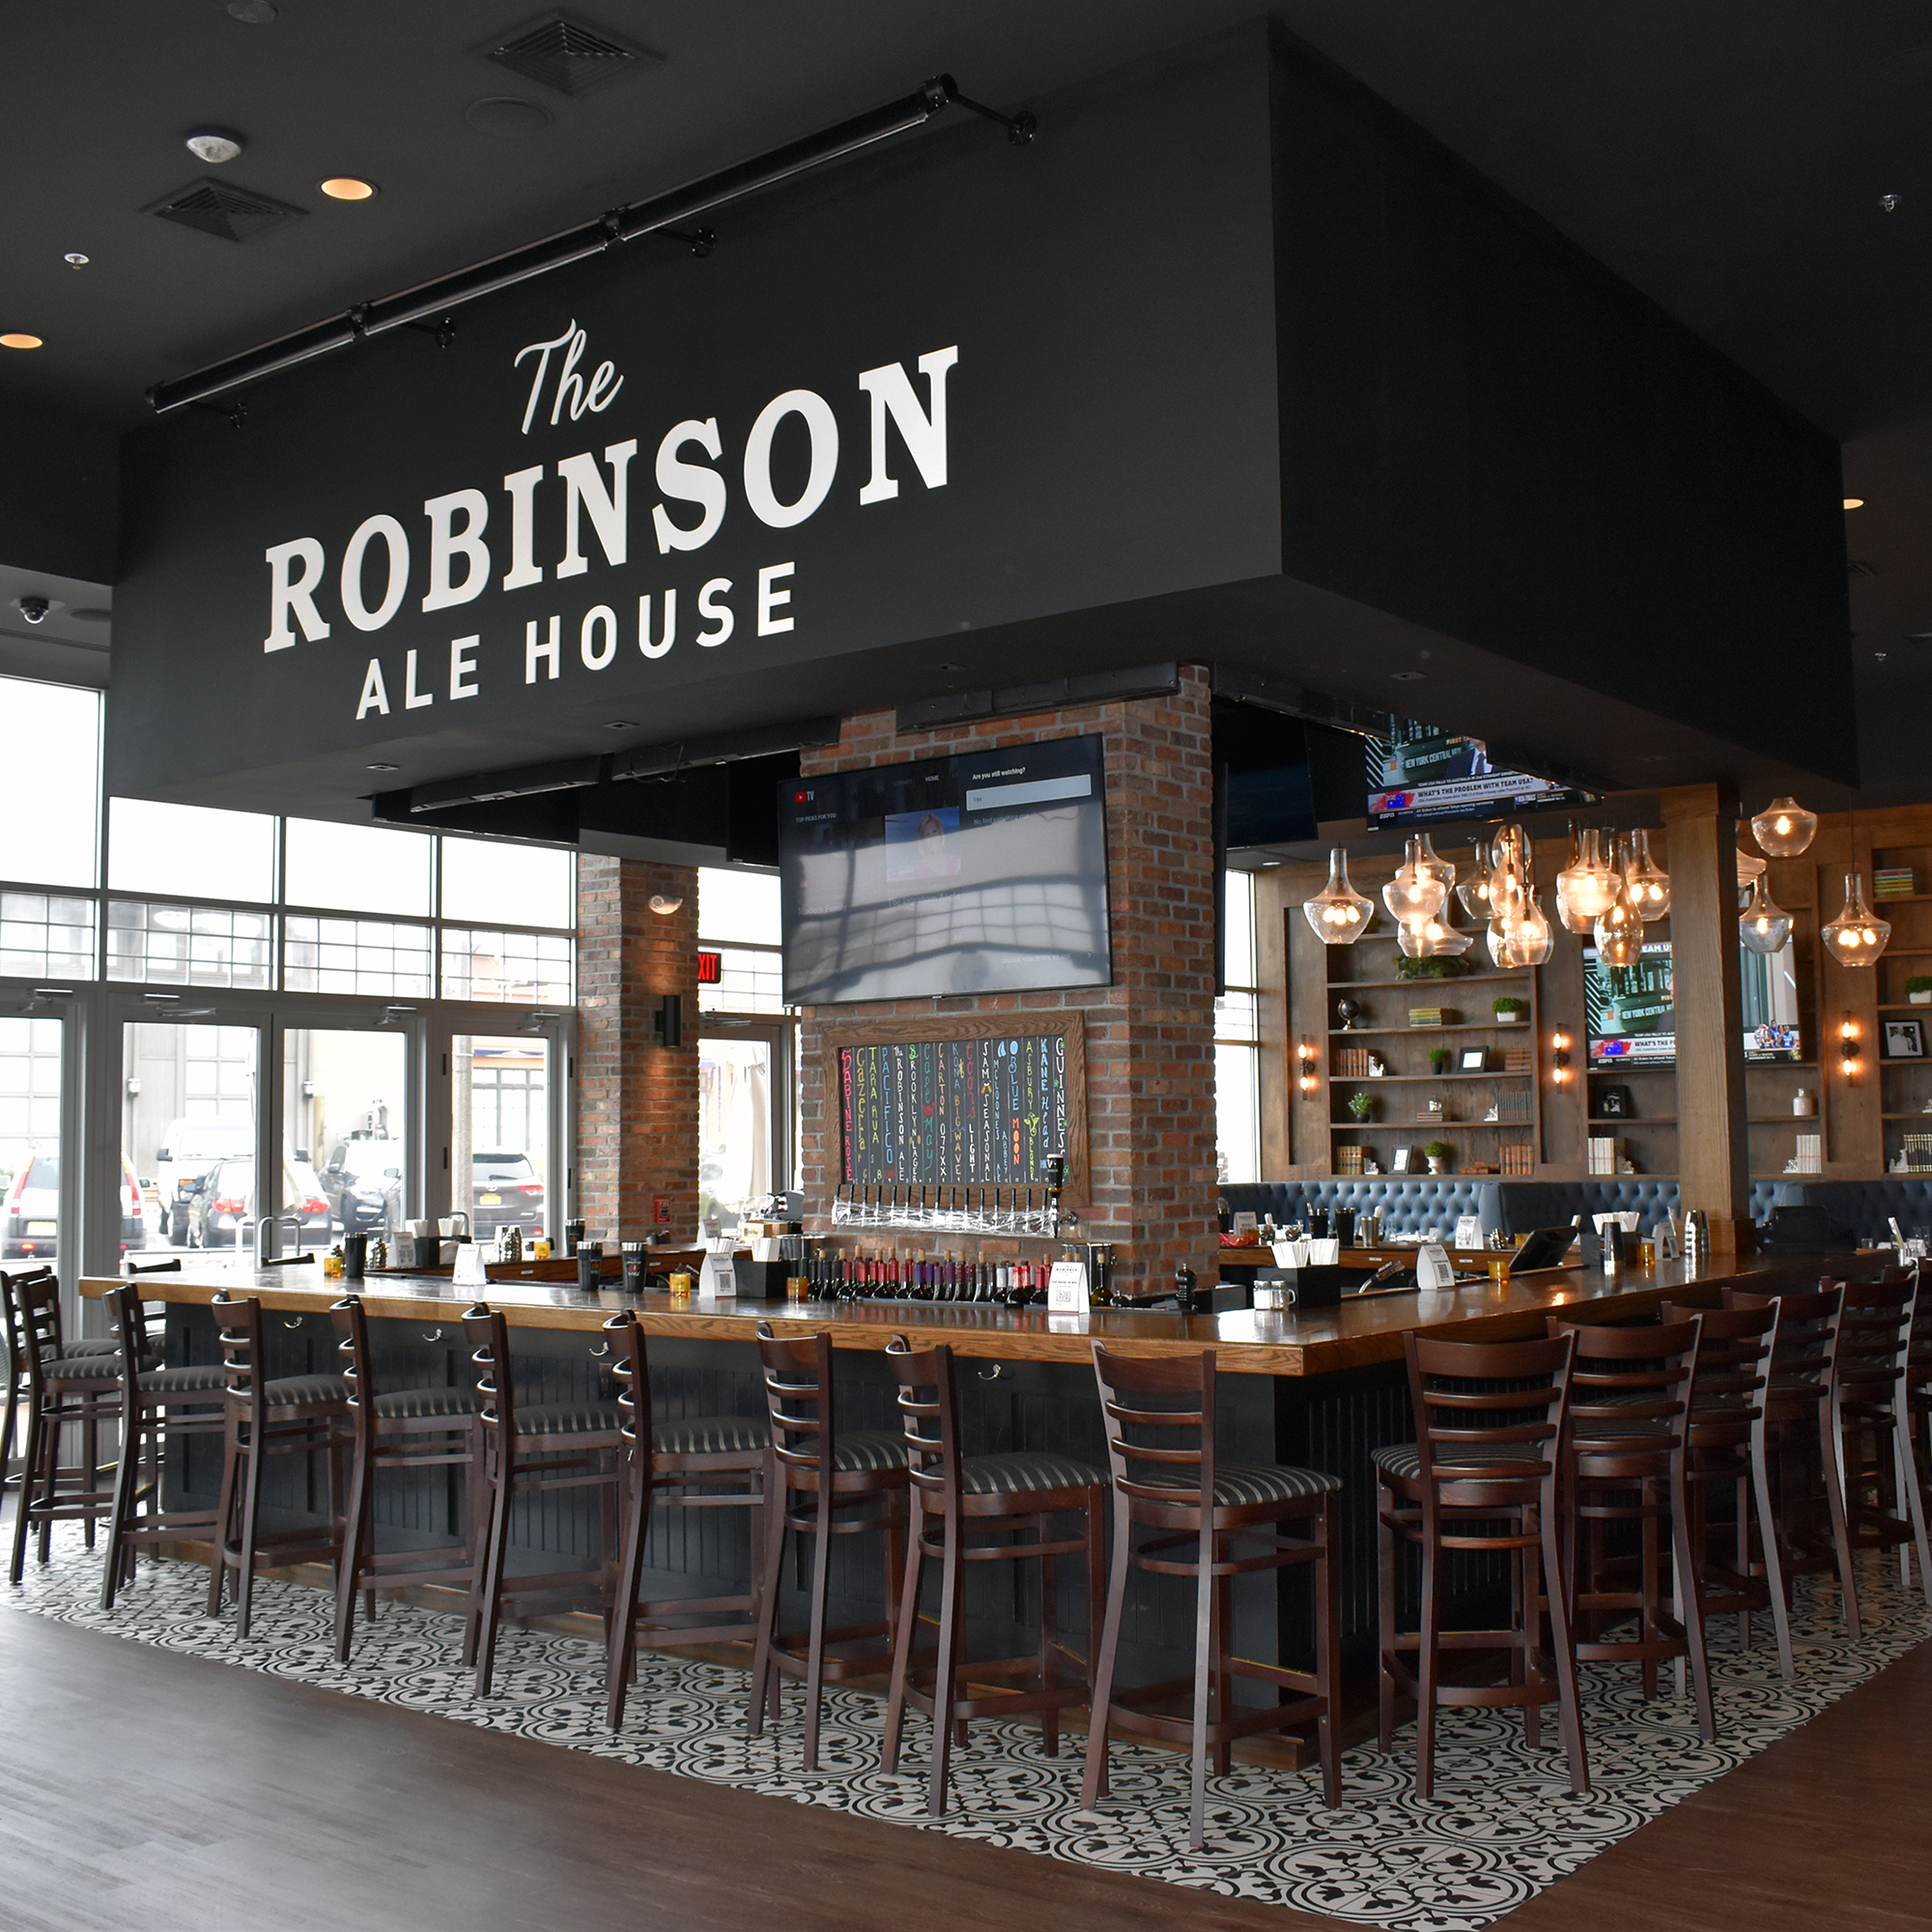 The Robinson Ale House